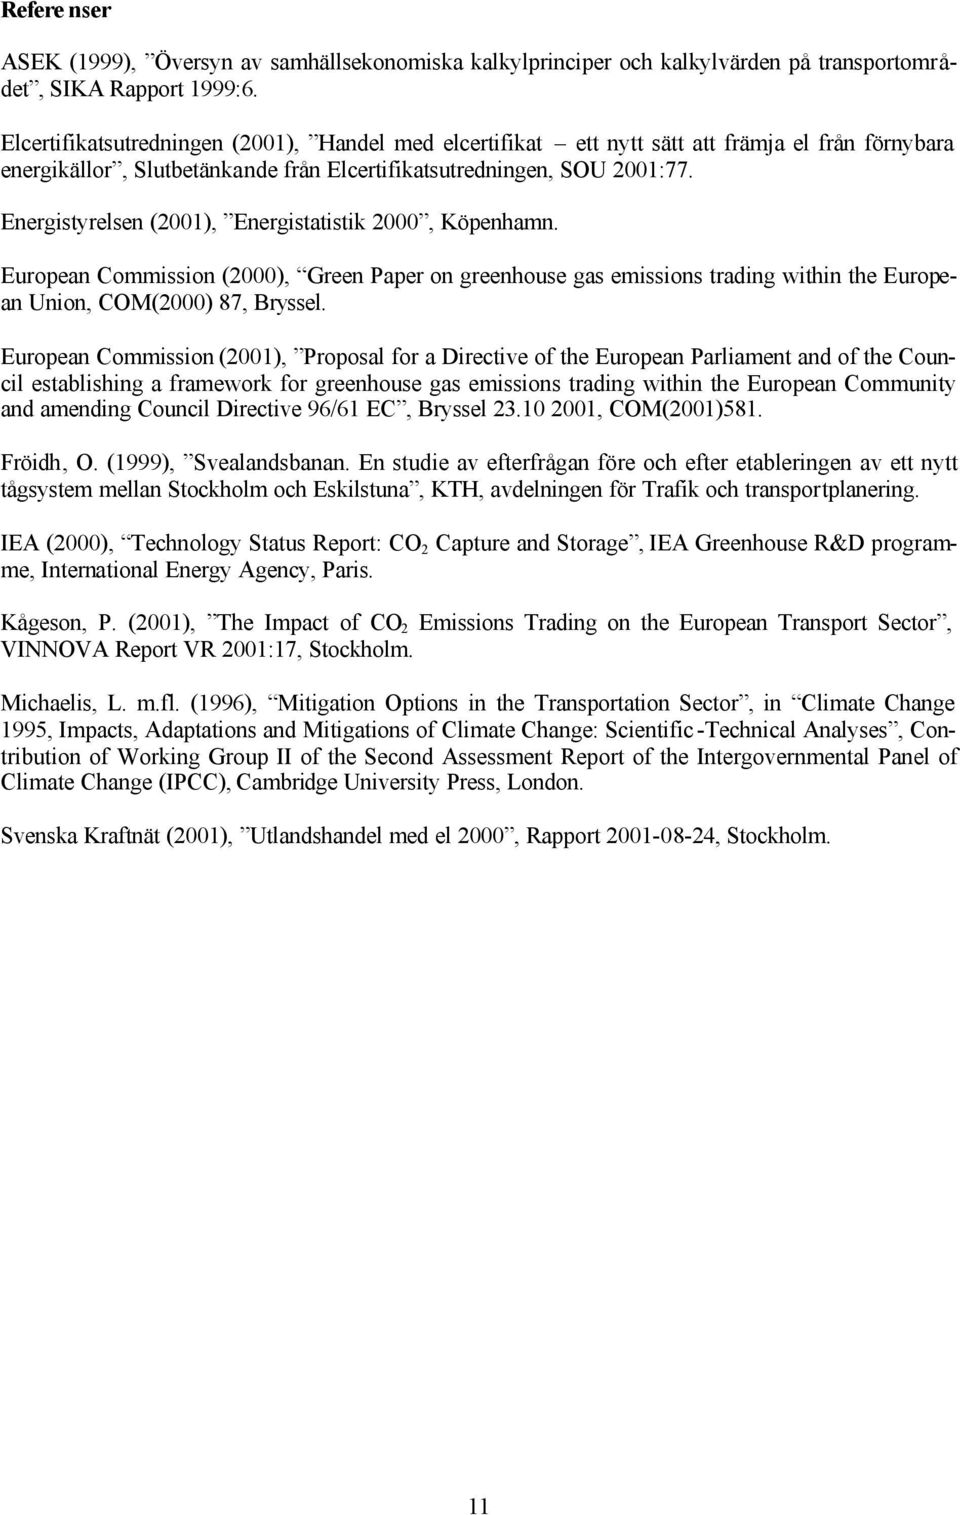 Energistyrelsen (2001), Energistatistik 2000, Köpenhamn. European Commission (2000), Green Paper on greenhouse gas emissions trading within the European Union, COM(2000) 87, Bryssel.